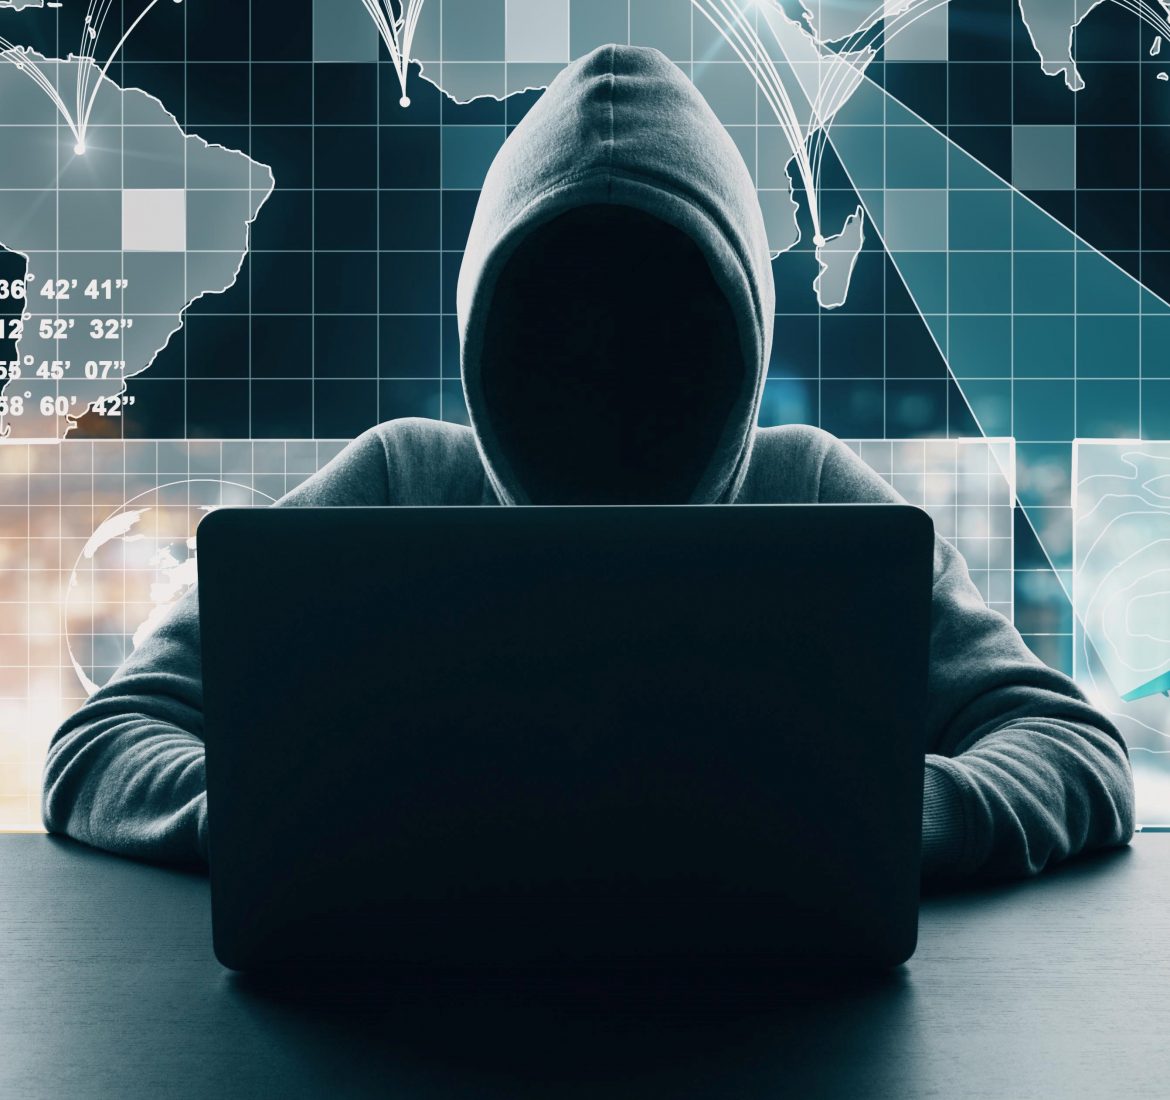 Stock photo of a hacker